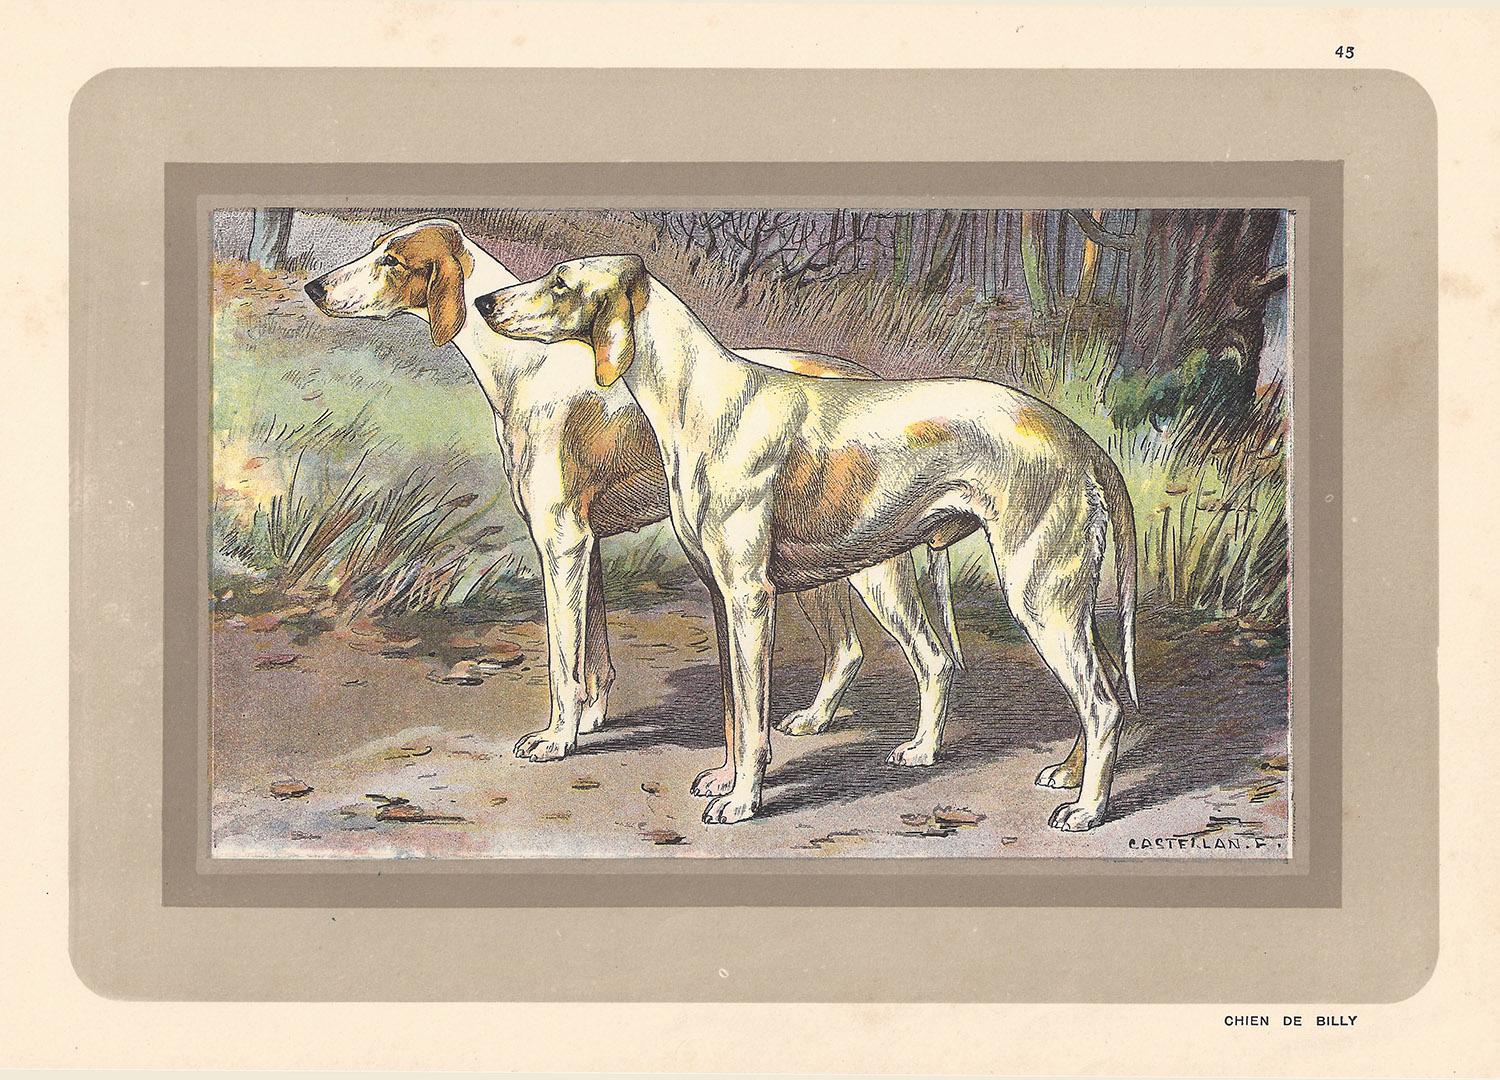 P. Mahler Animal Print - Chien de Billy, French hound, dog chromolithograph, 1930s